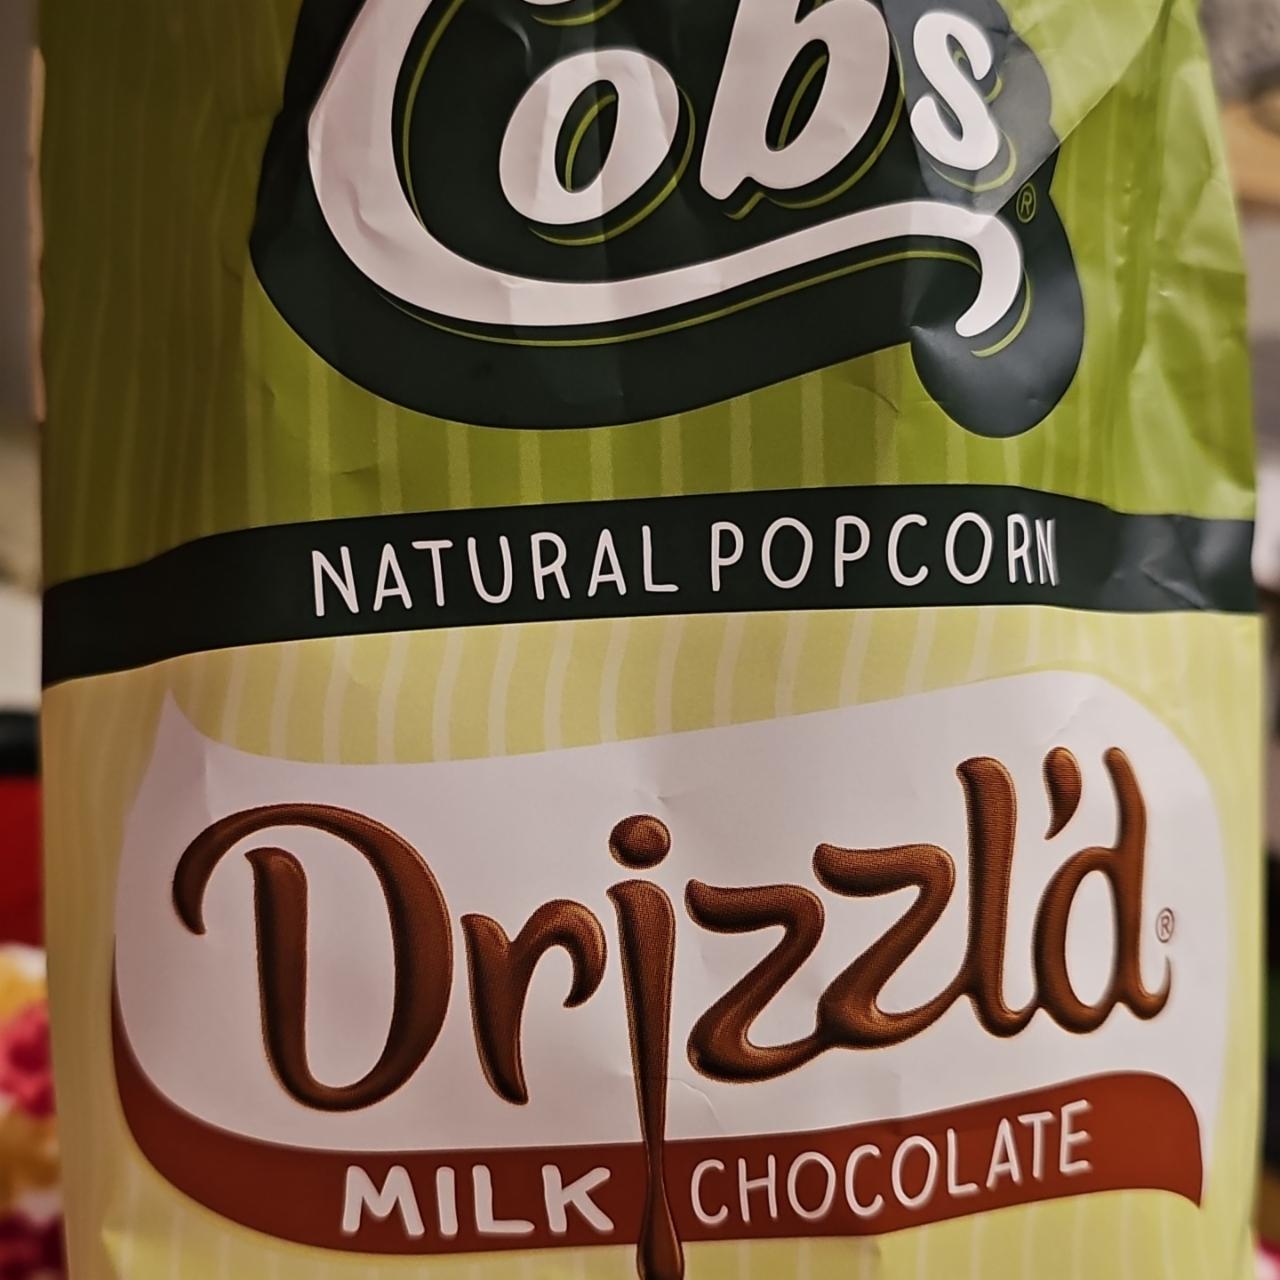 Fotografie - Natural Popcorn Drizzl'd Milk Chocolate Cobs